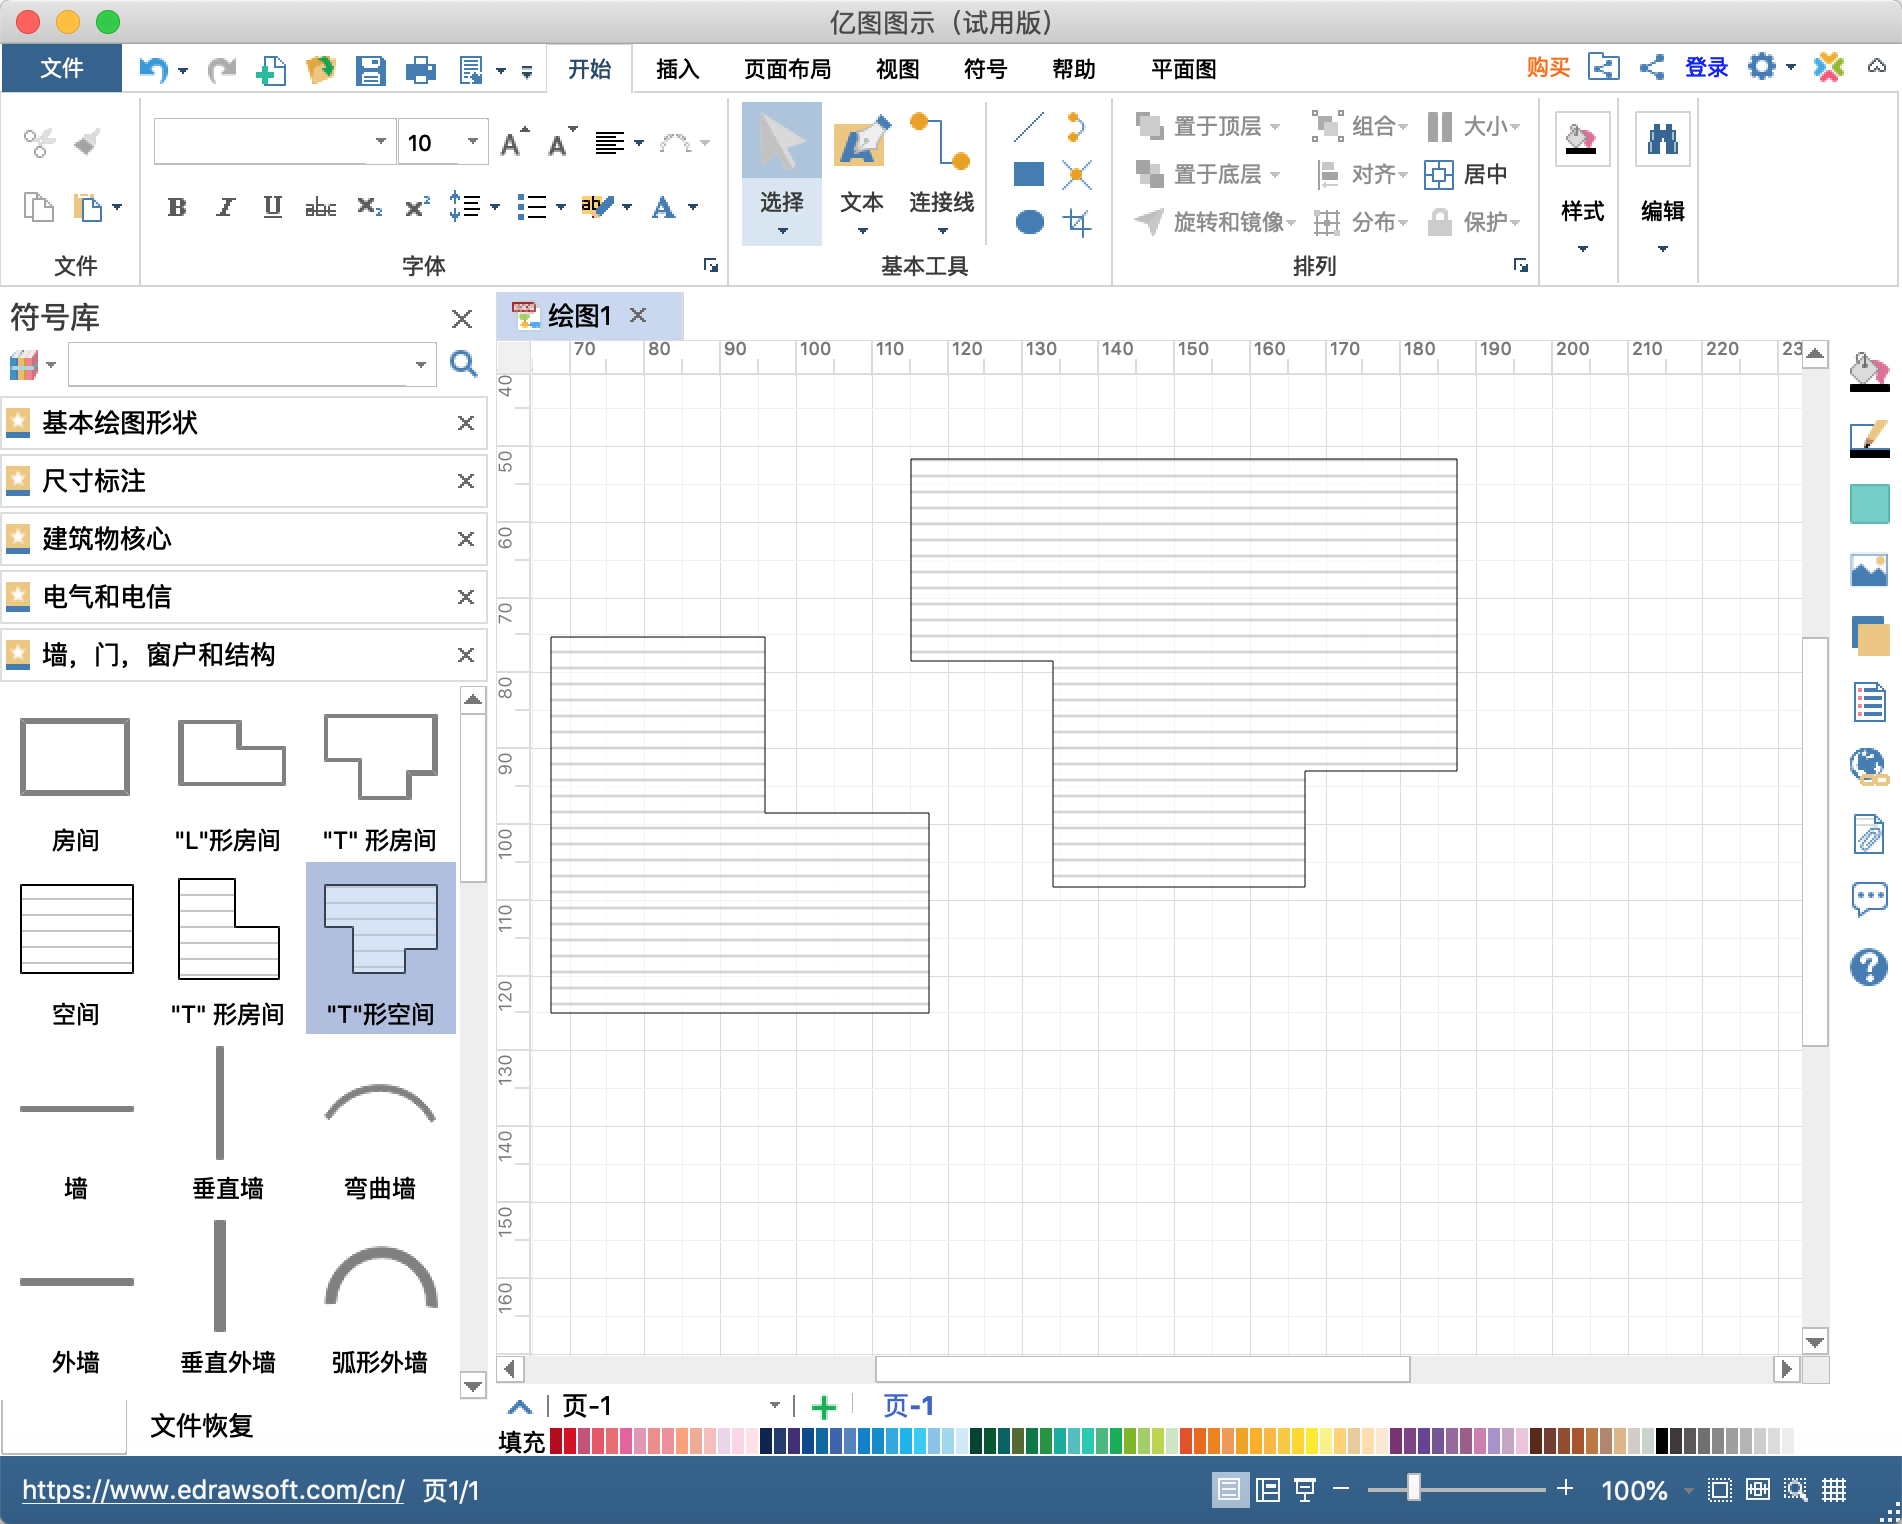 亿图图示专家 for mac 9.1中文版